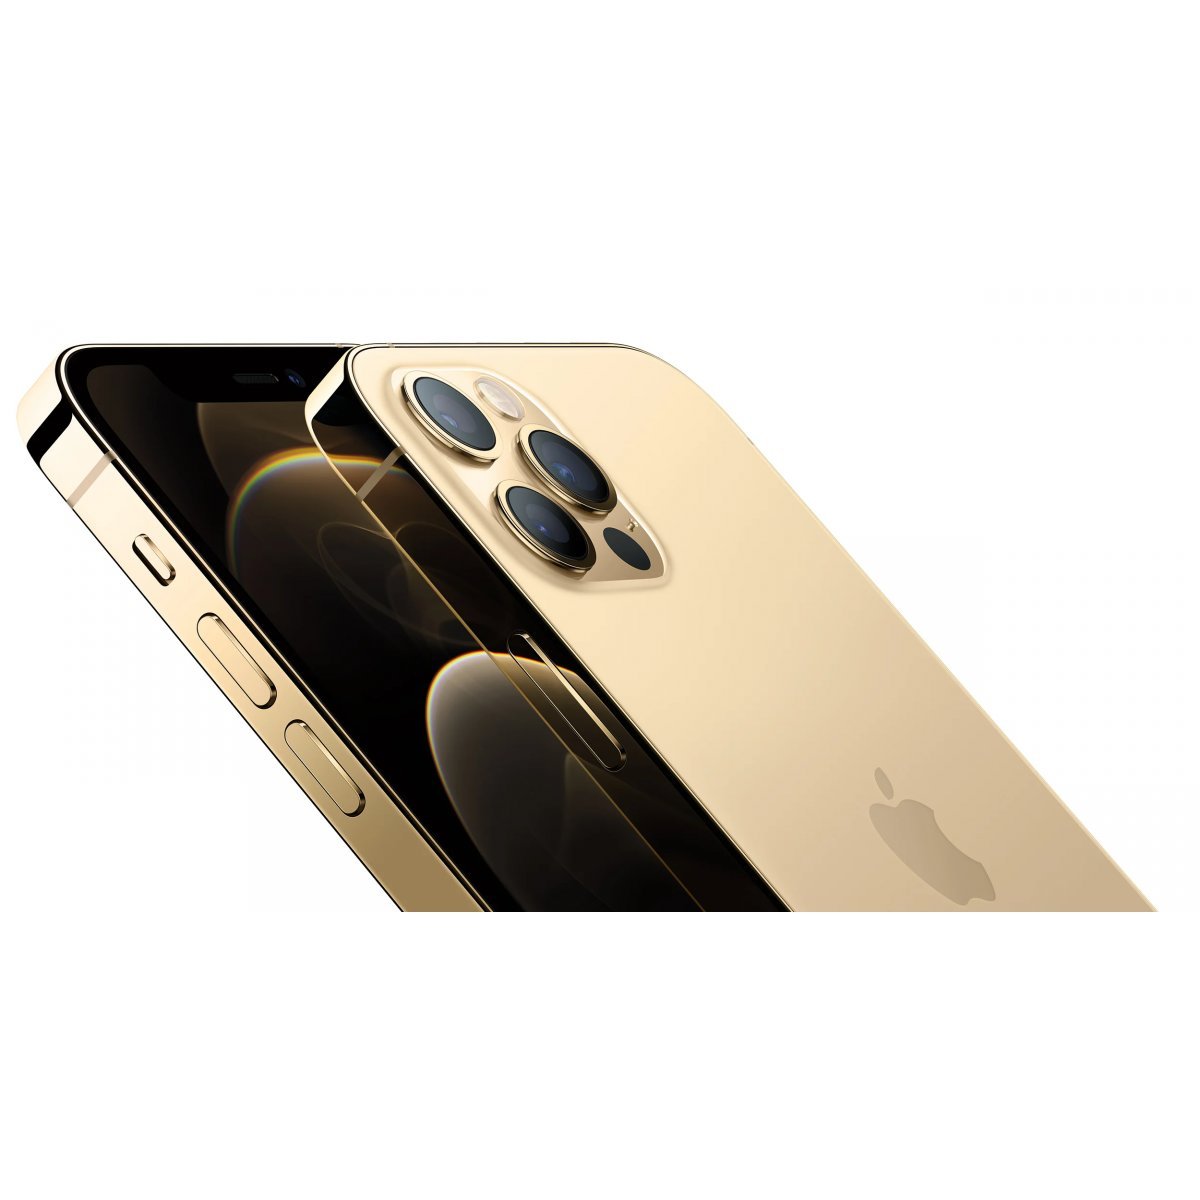 iPhone 12 Pro 512gb Gold (Mgj3ll/A)